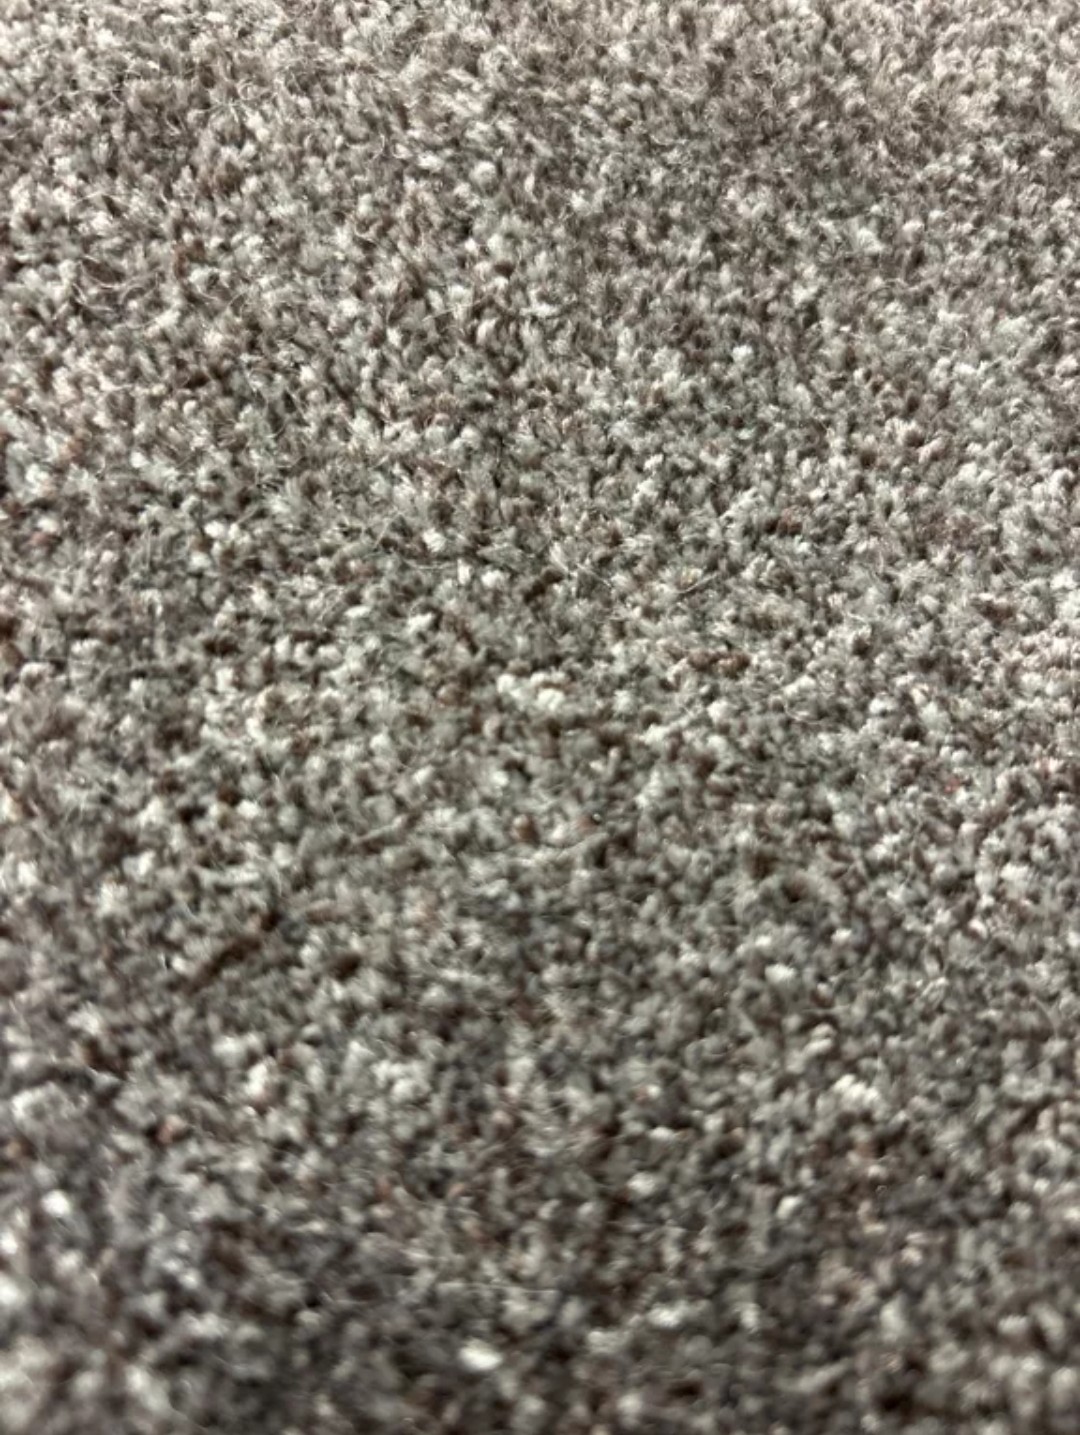 Lugano carpet